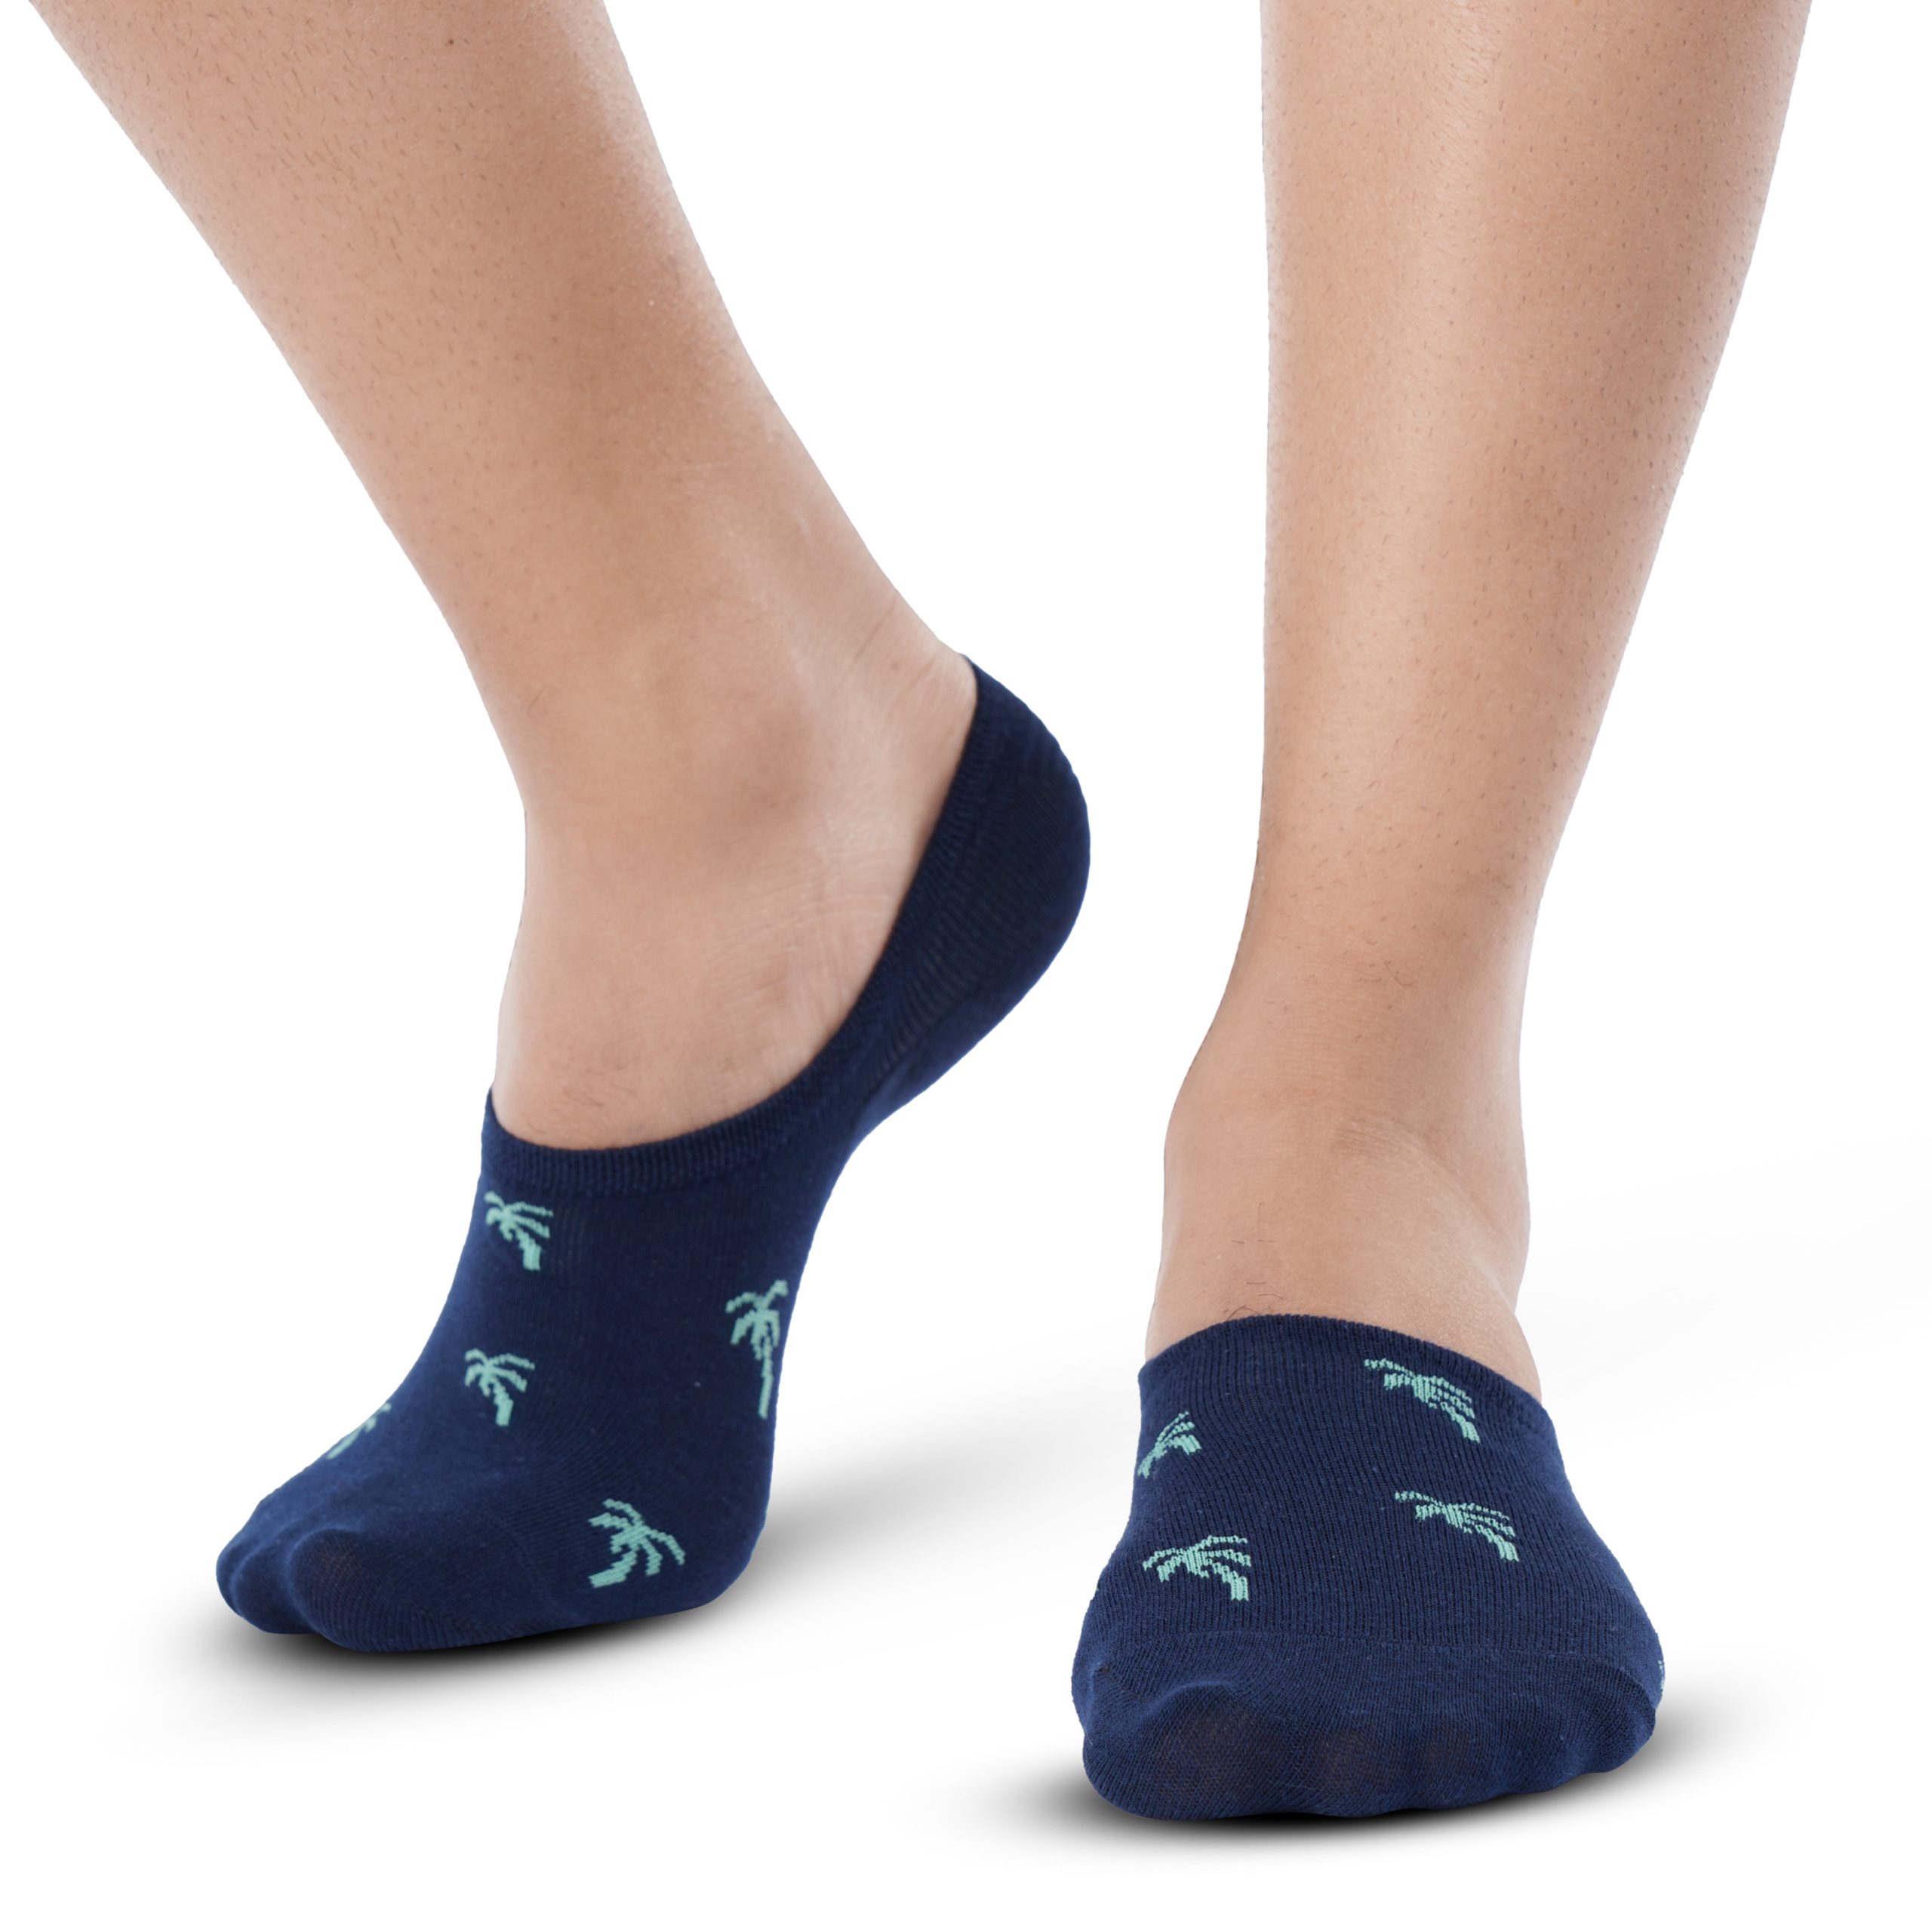 Albury: Blue & Green Palm Ankle Socks